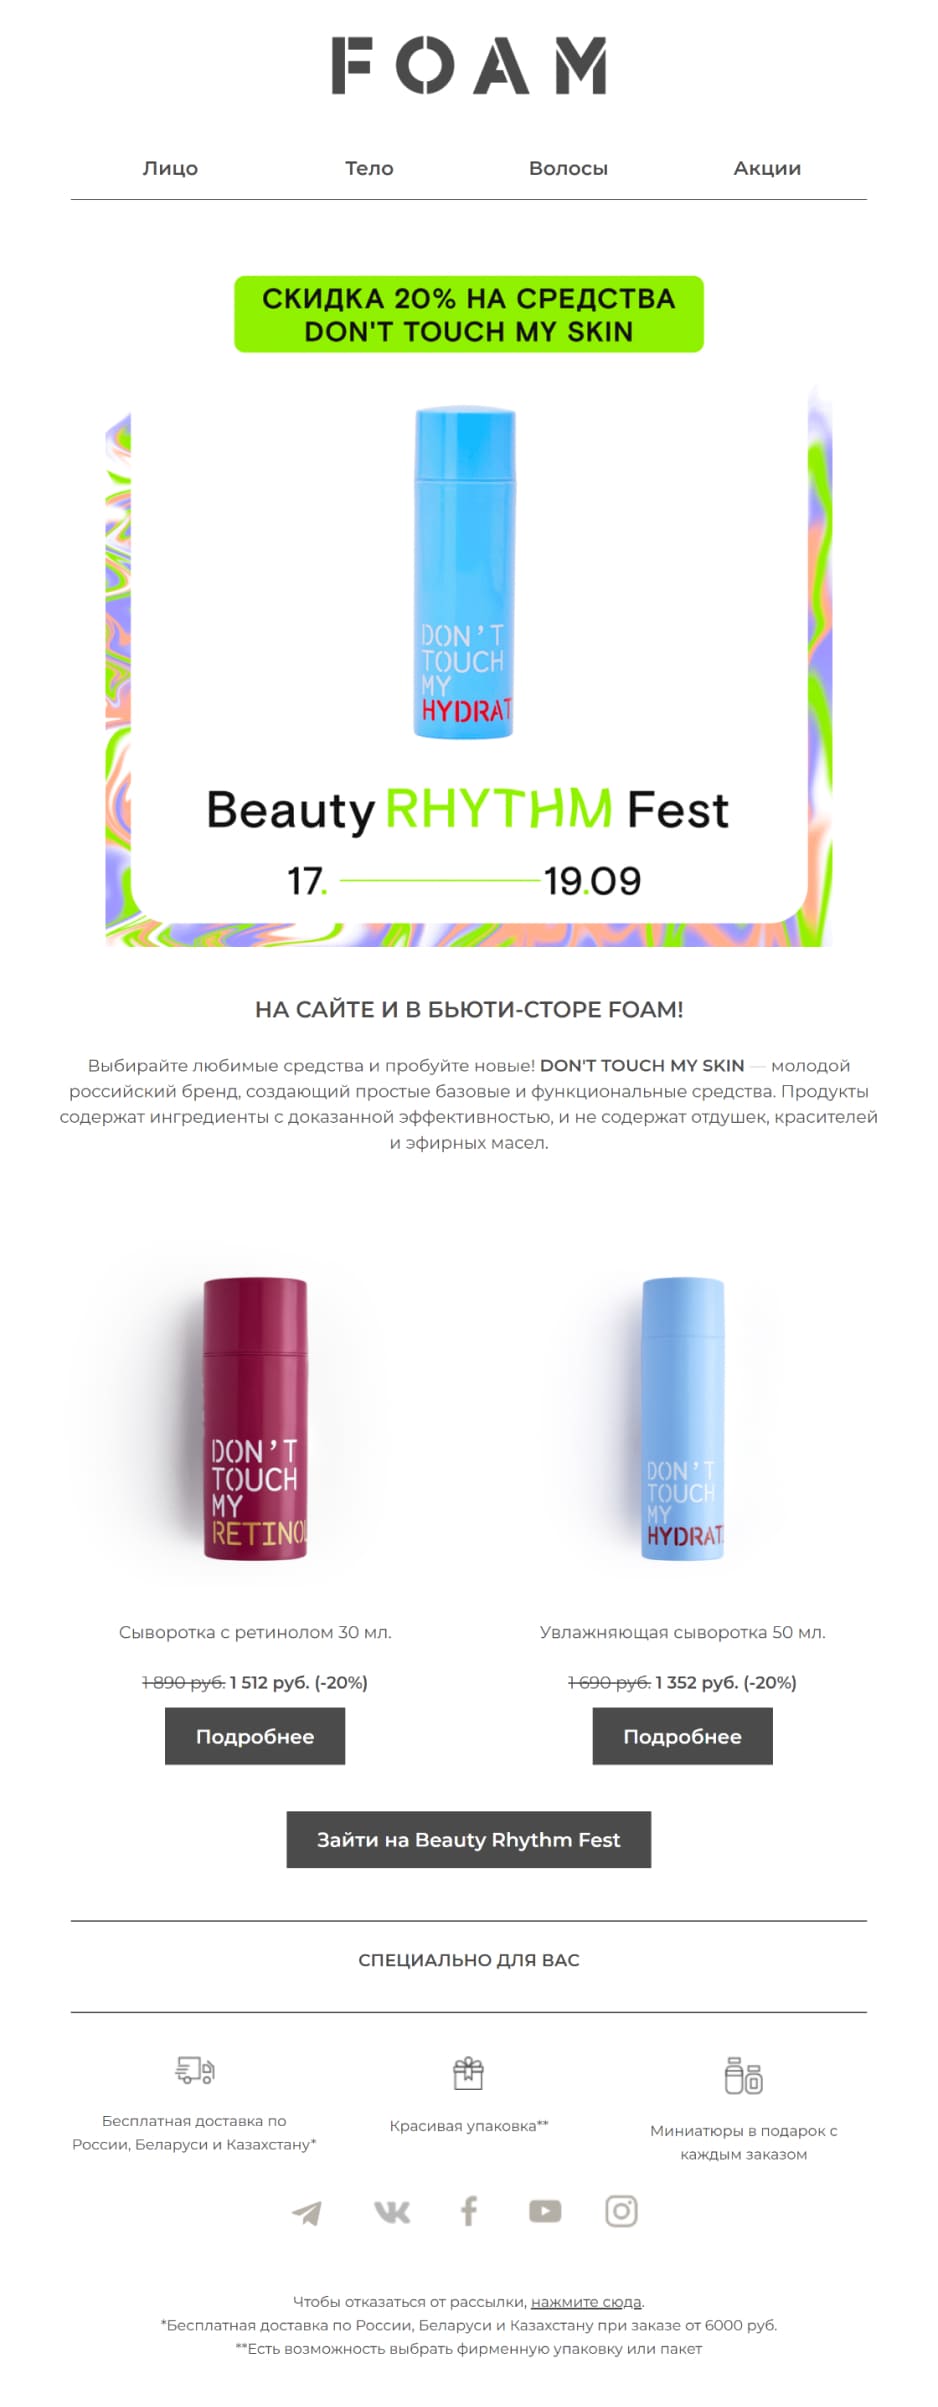 Письмо об акции Beauty Rhythm Fest